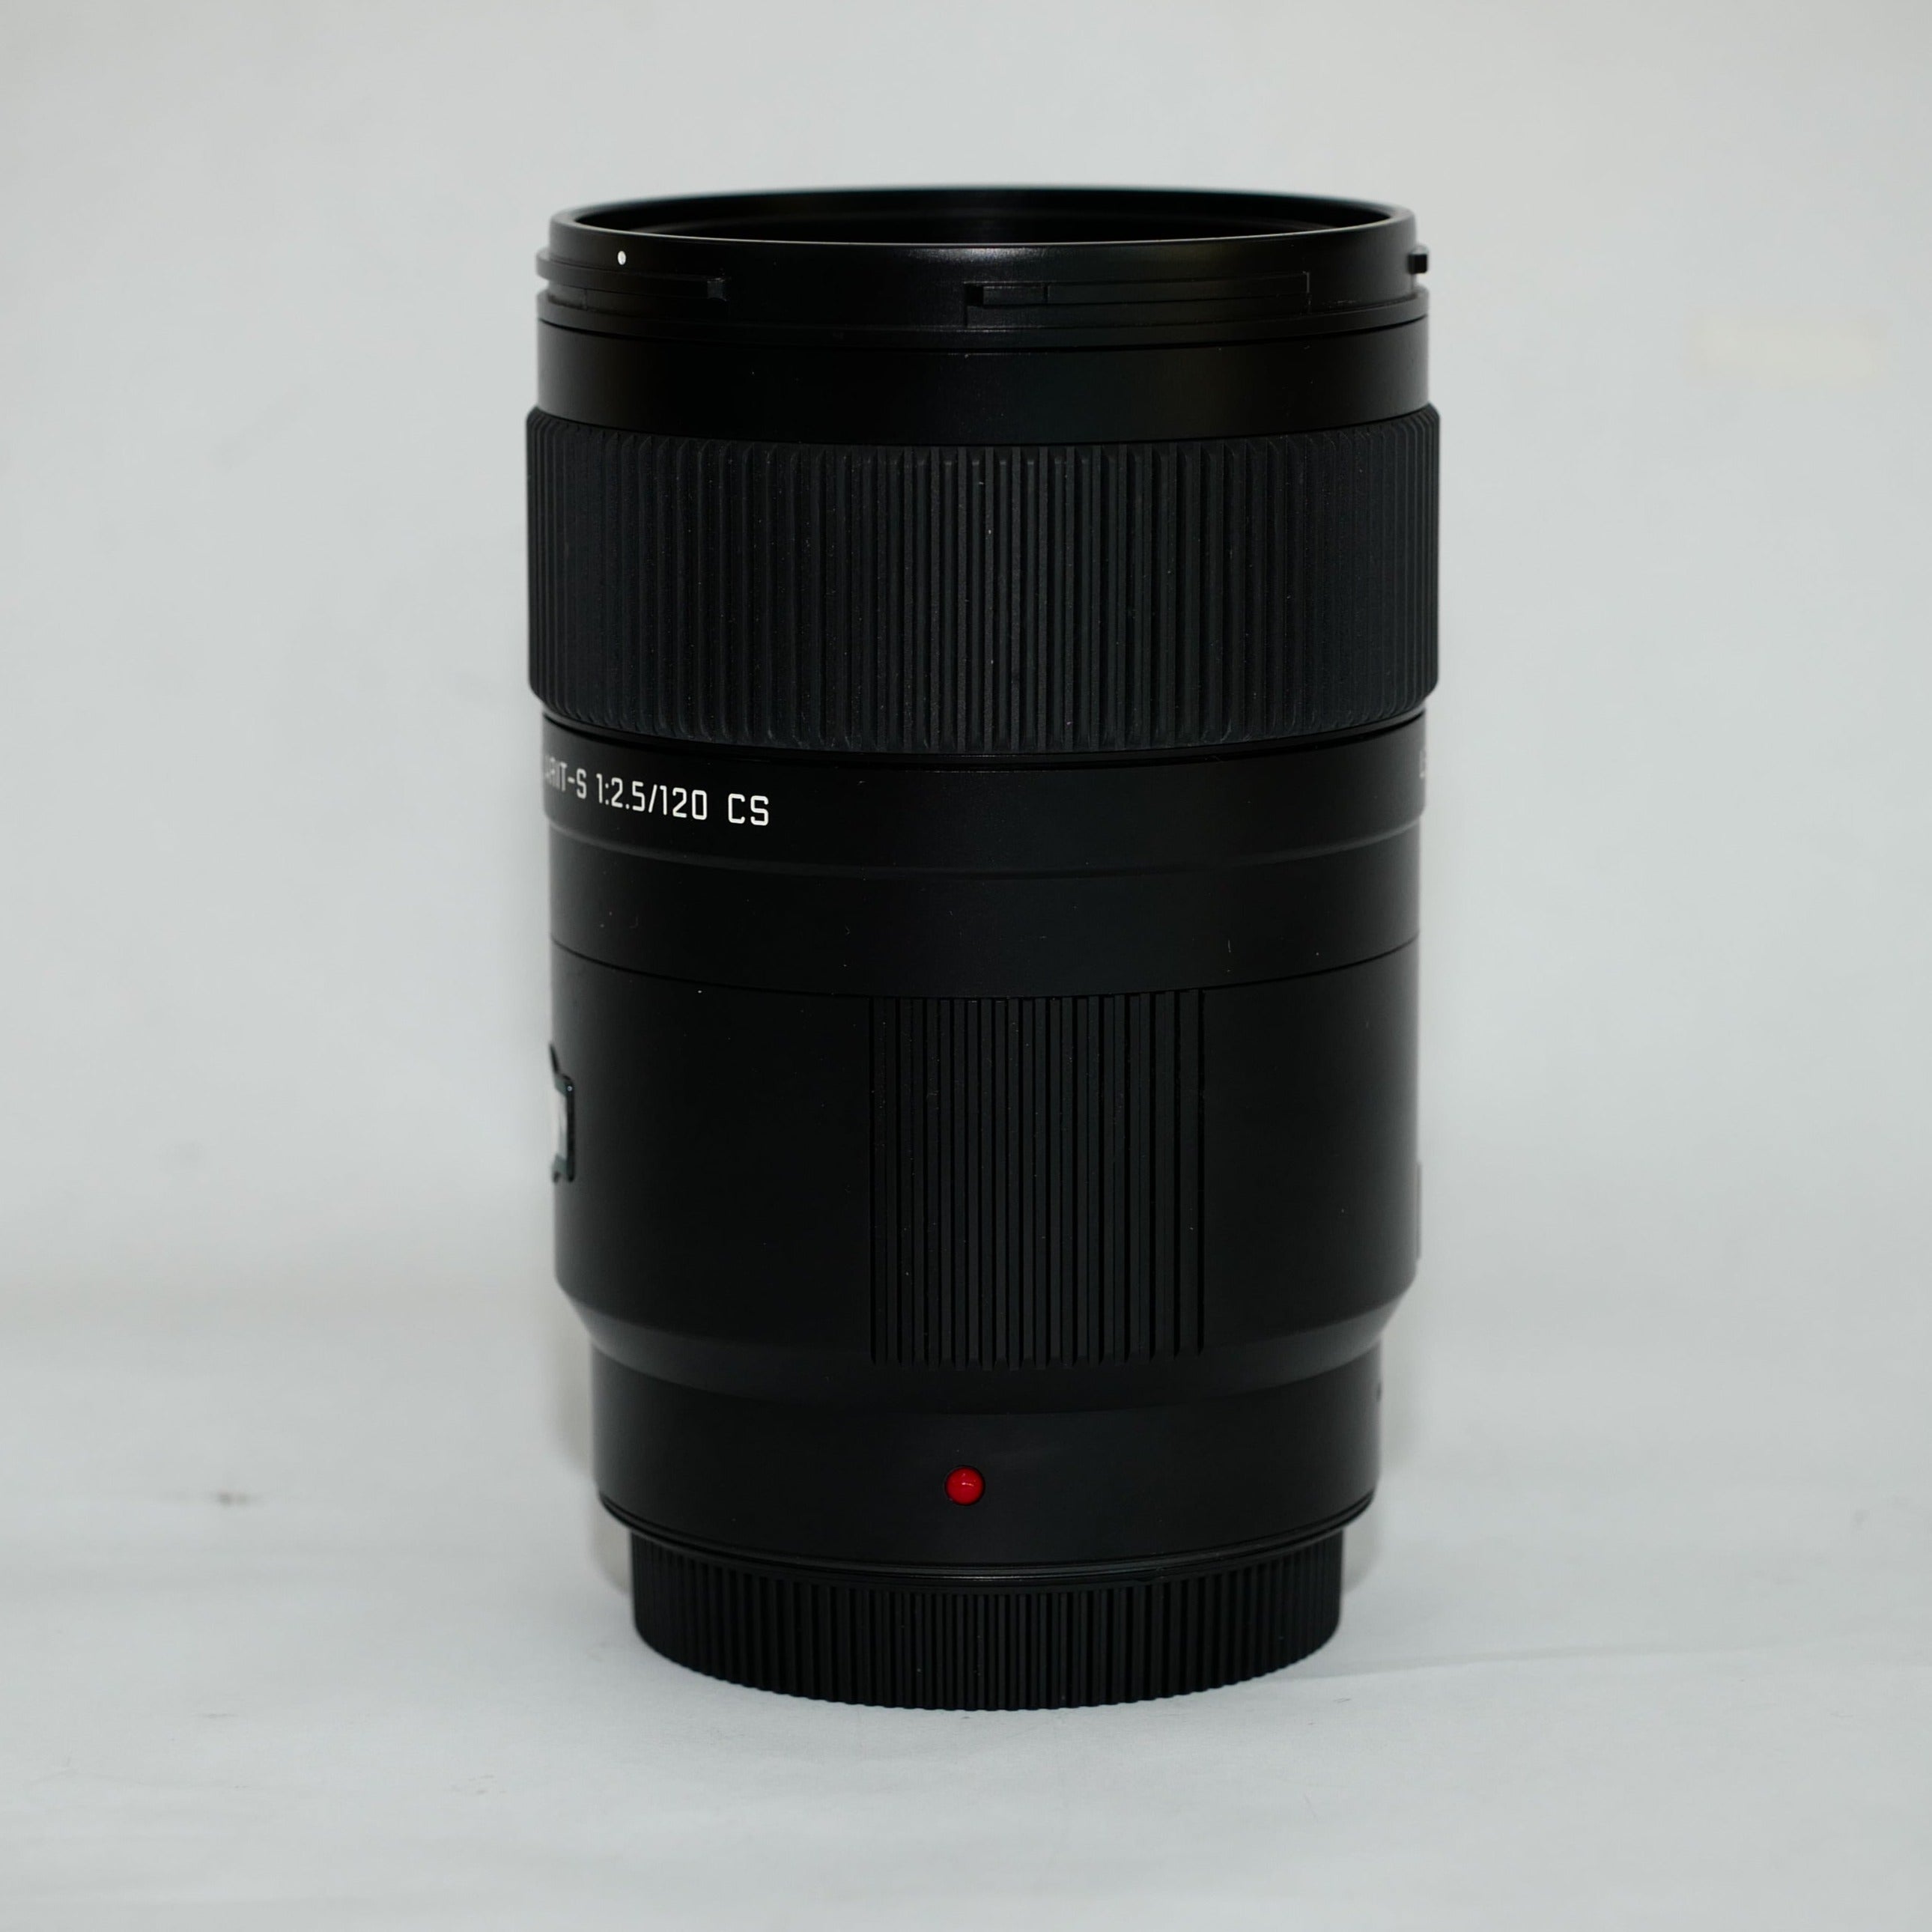 Pre-Owned Leica APO-Macro-Summarit-S 120mm f/2.5 CS Lens